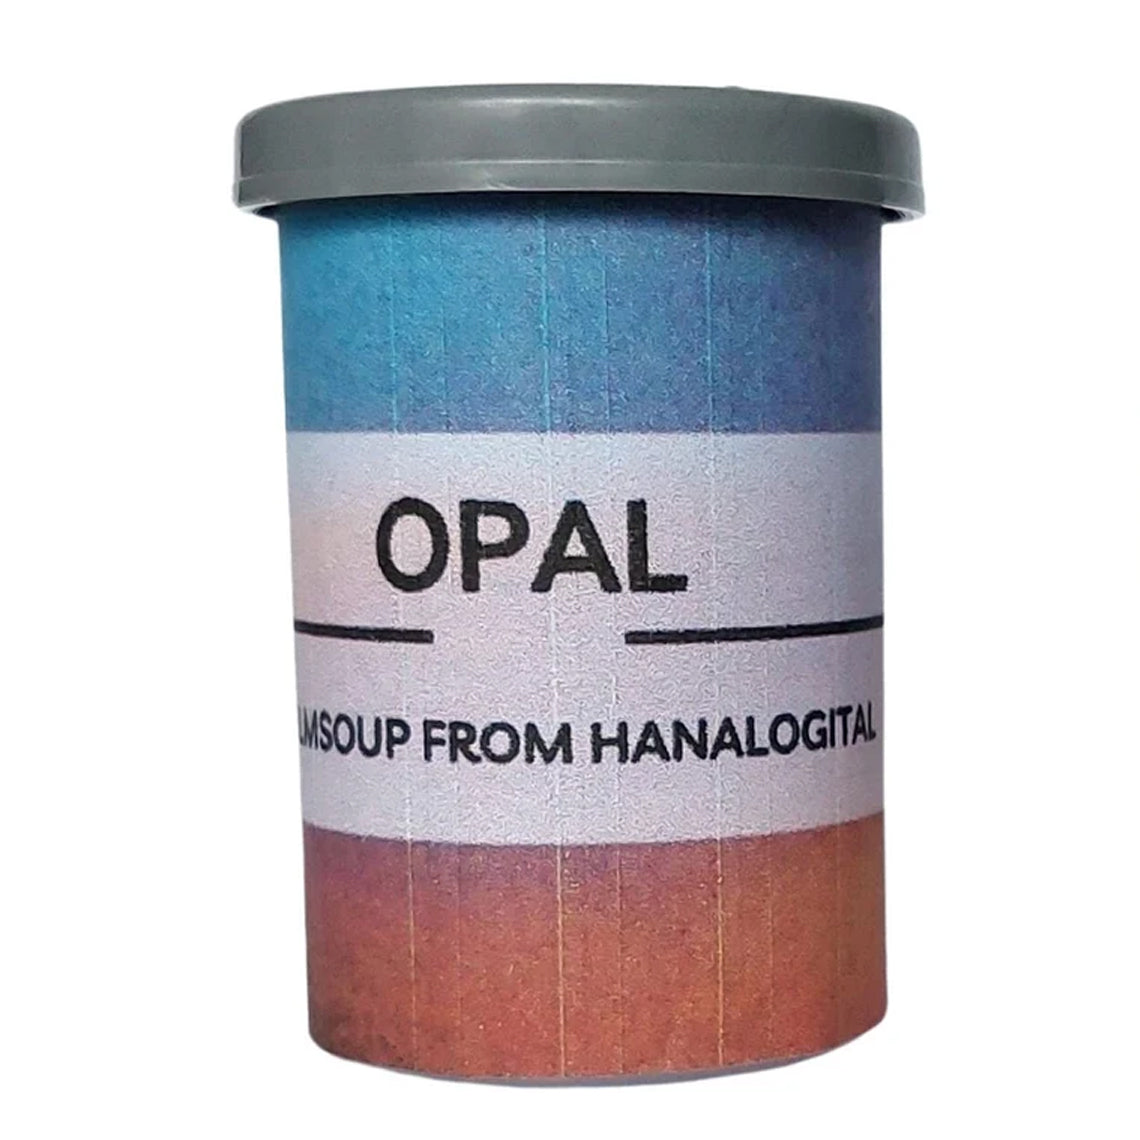 Hanalogital Opal Filmsoup 35mm Film 24 Exposures (£20.99 incl VAT)